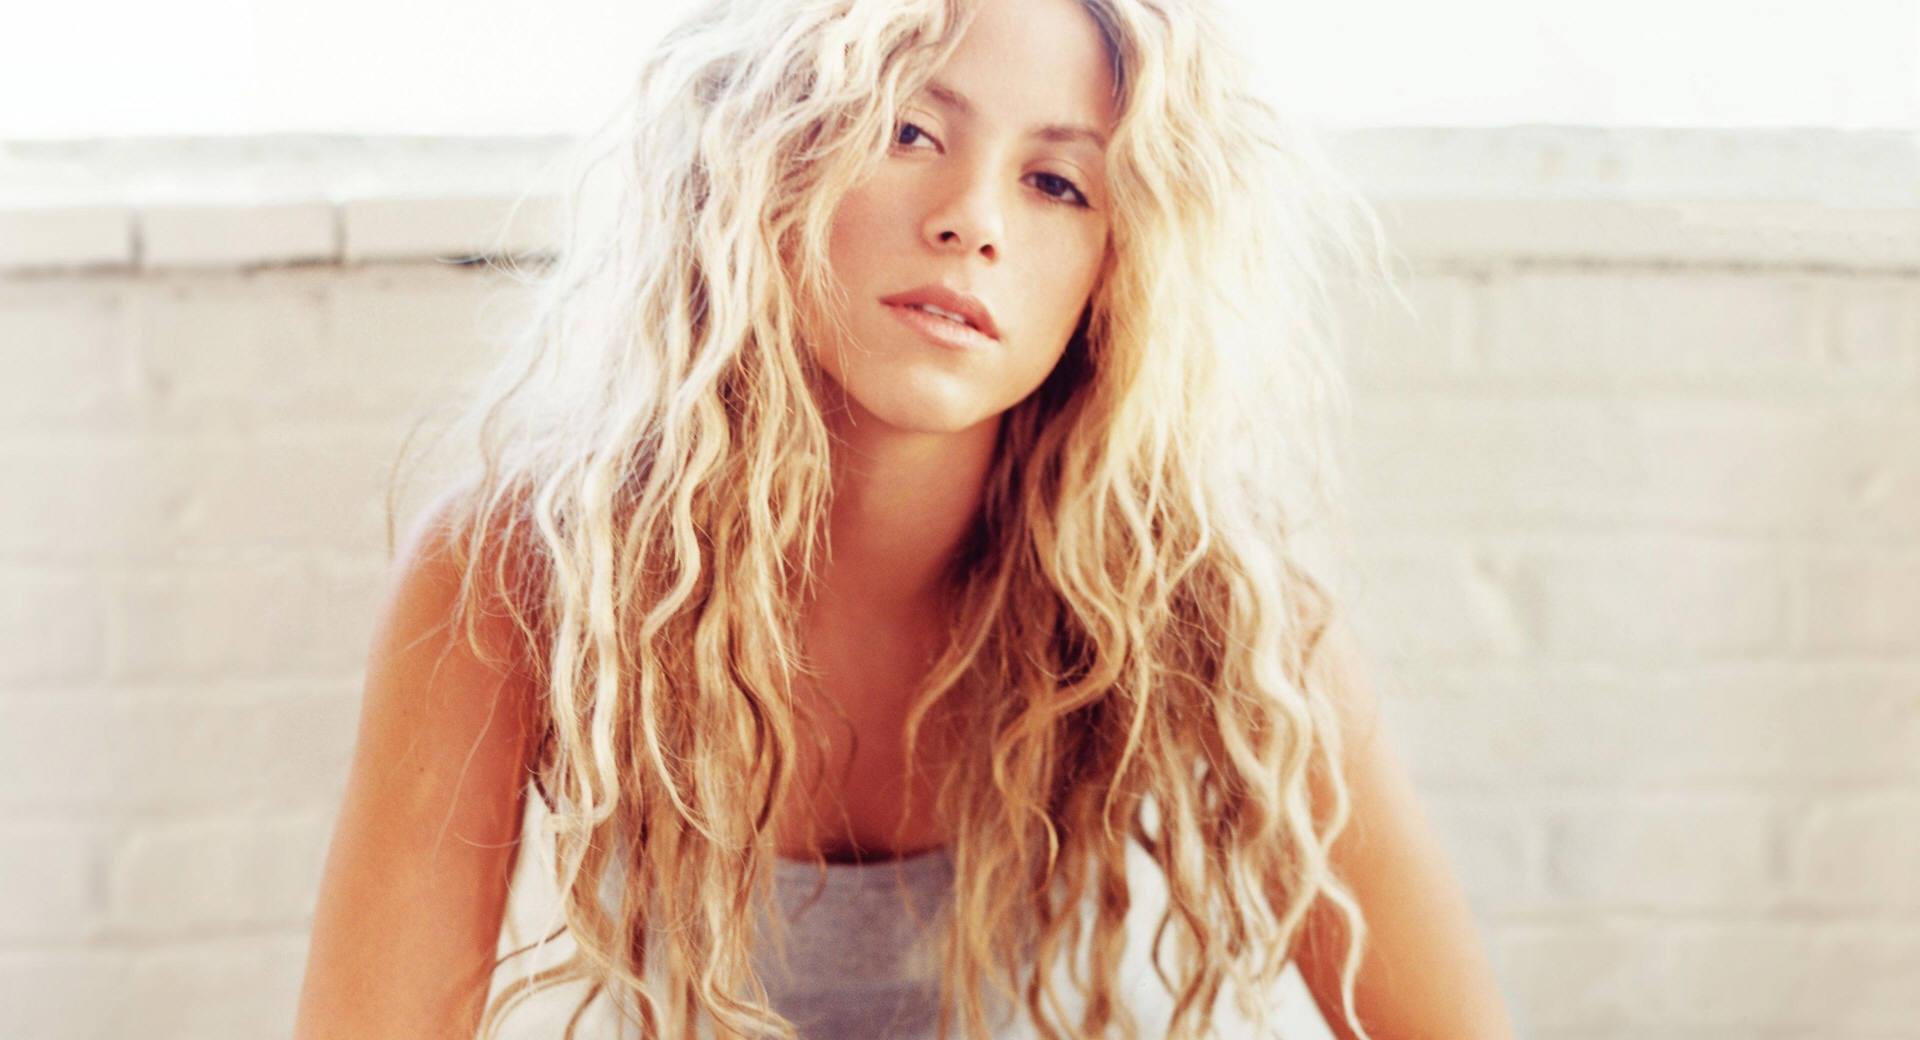 Shakira Mebarak at 320 x 480 iPhone size wallpapers HD quality